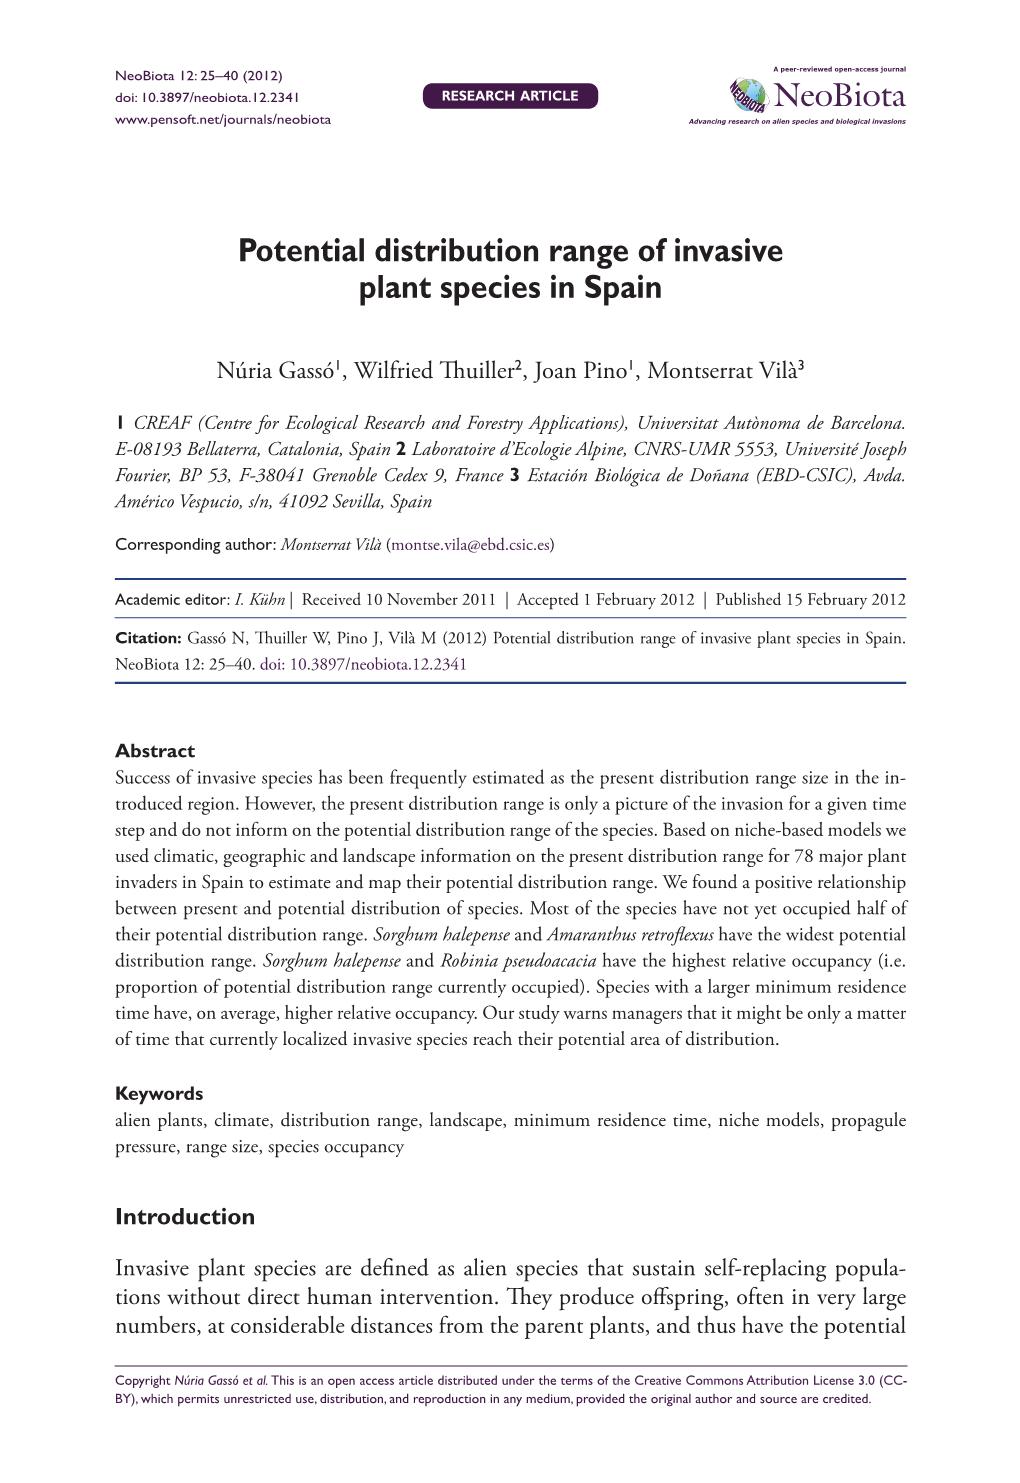 Potential Distribution Range of Invasive Plant Species in Spain